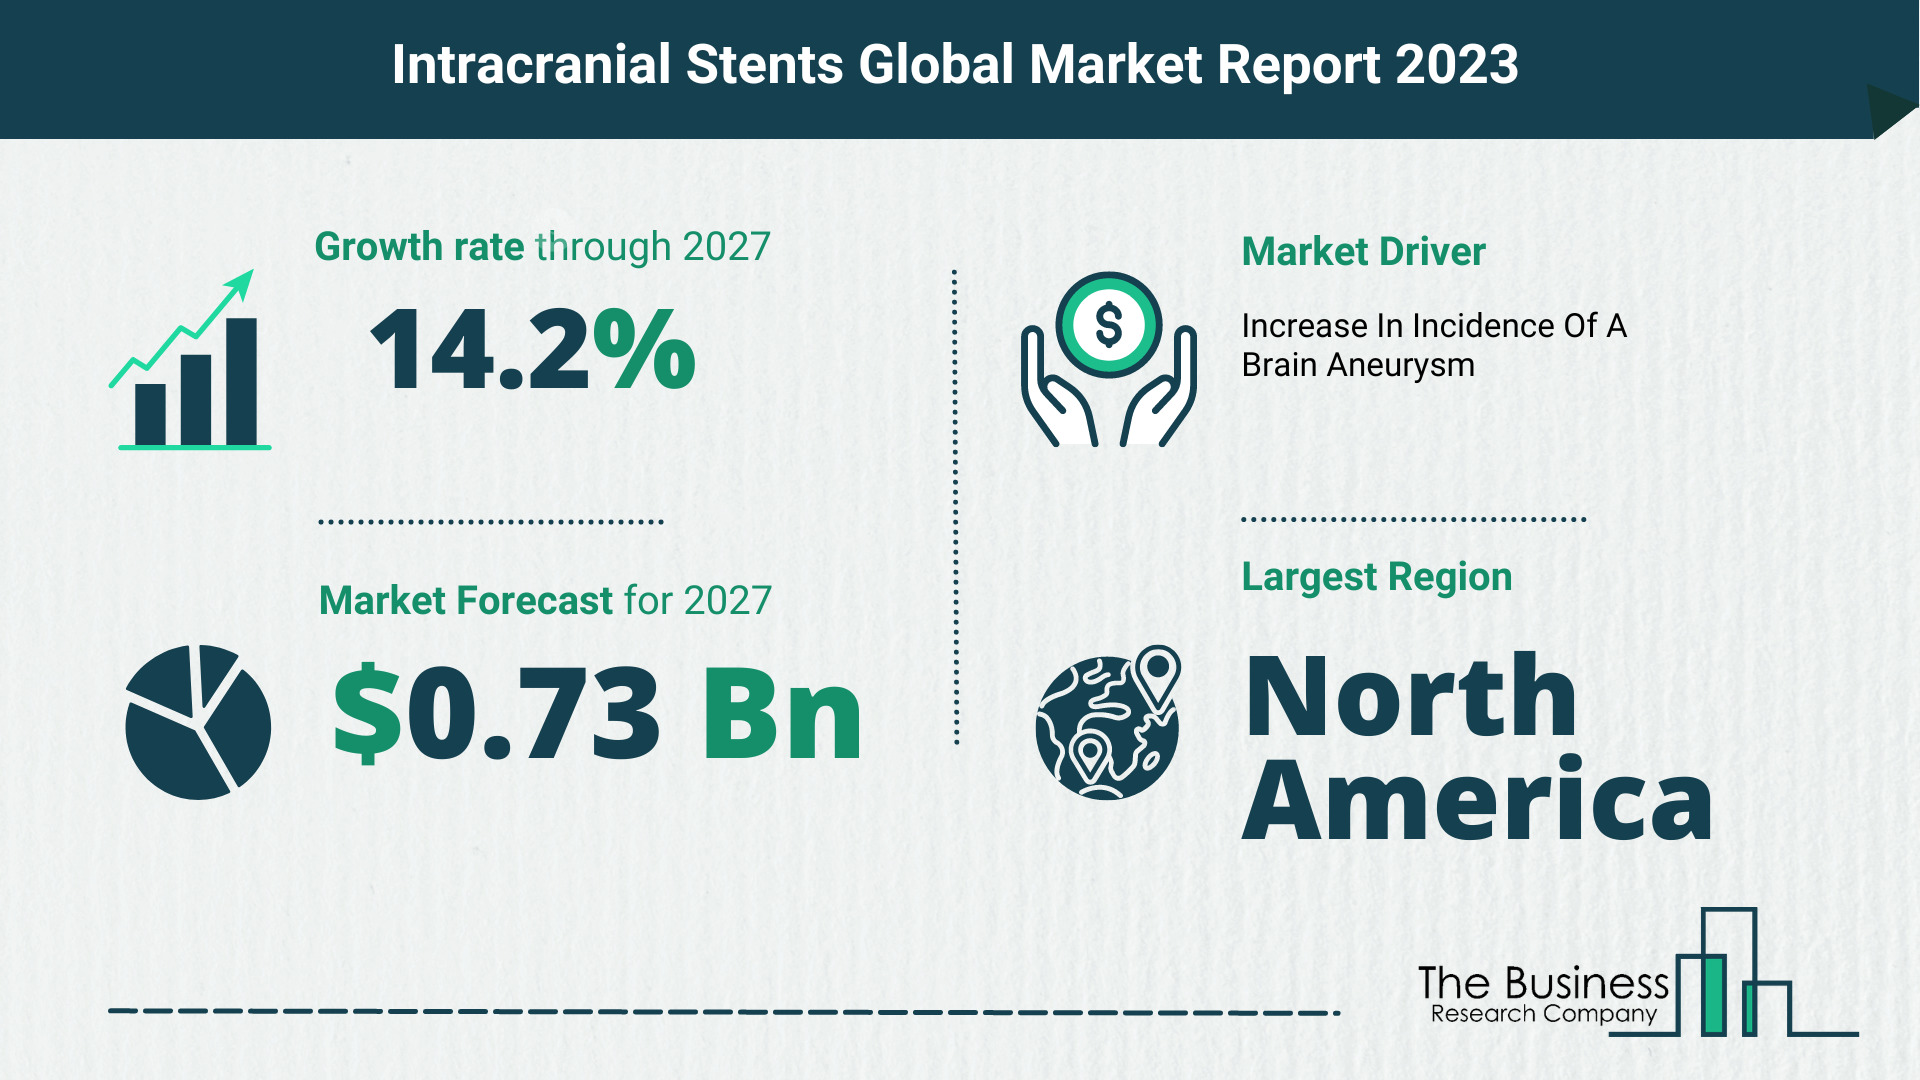 Global Intracranial Stents Market Size